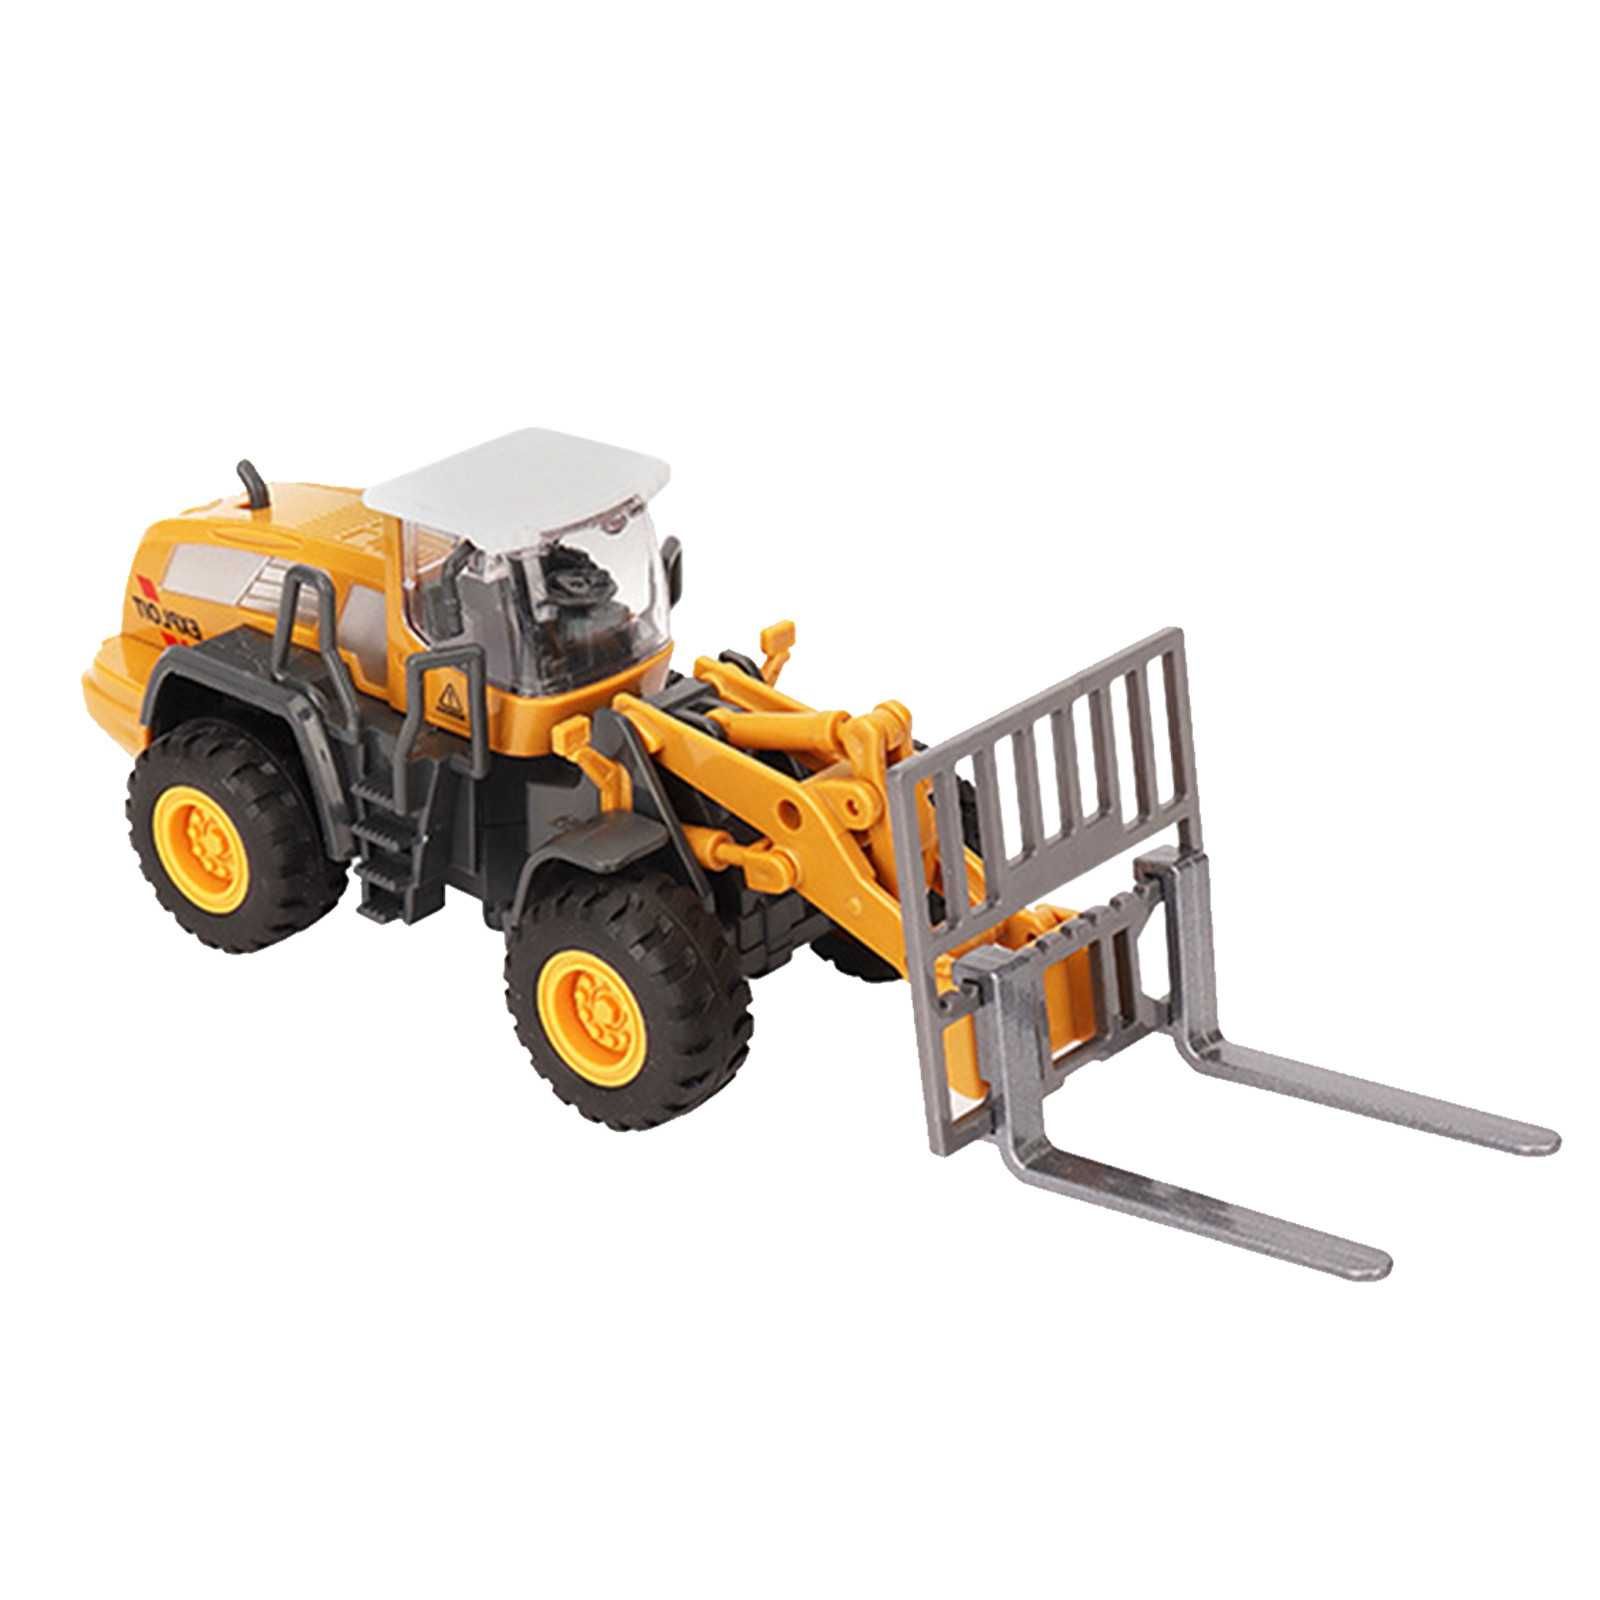 Детска играчка- Строителни превозни средства,1:55 Симулационен модел